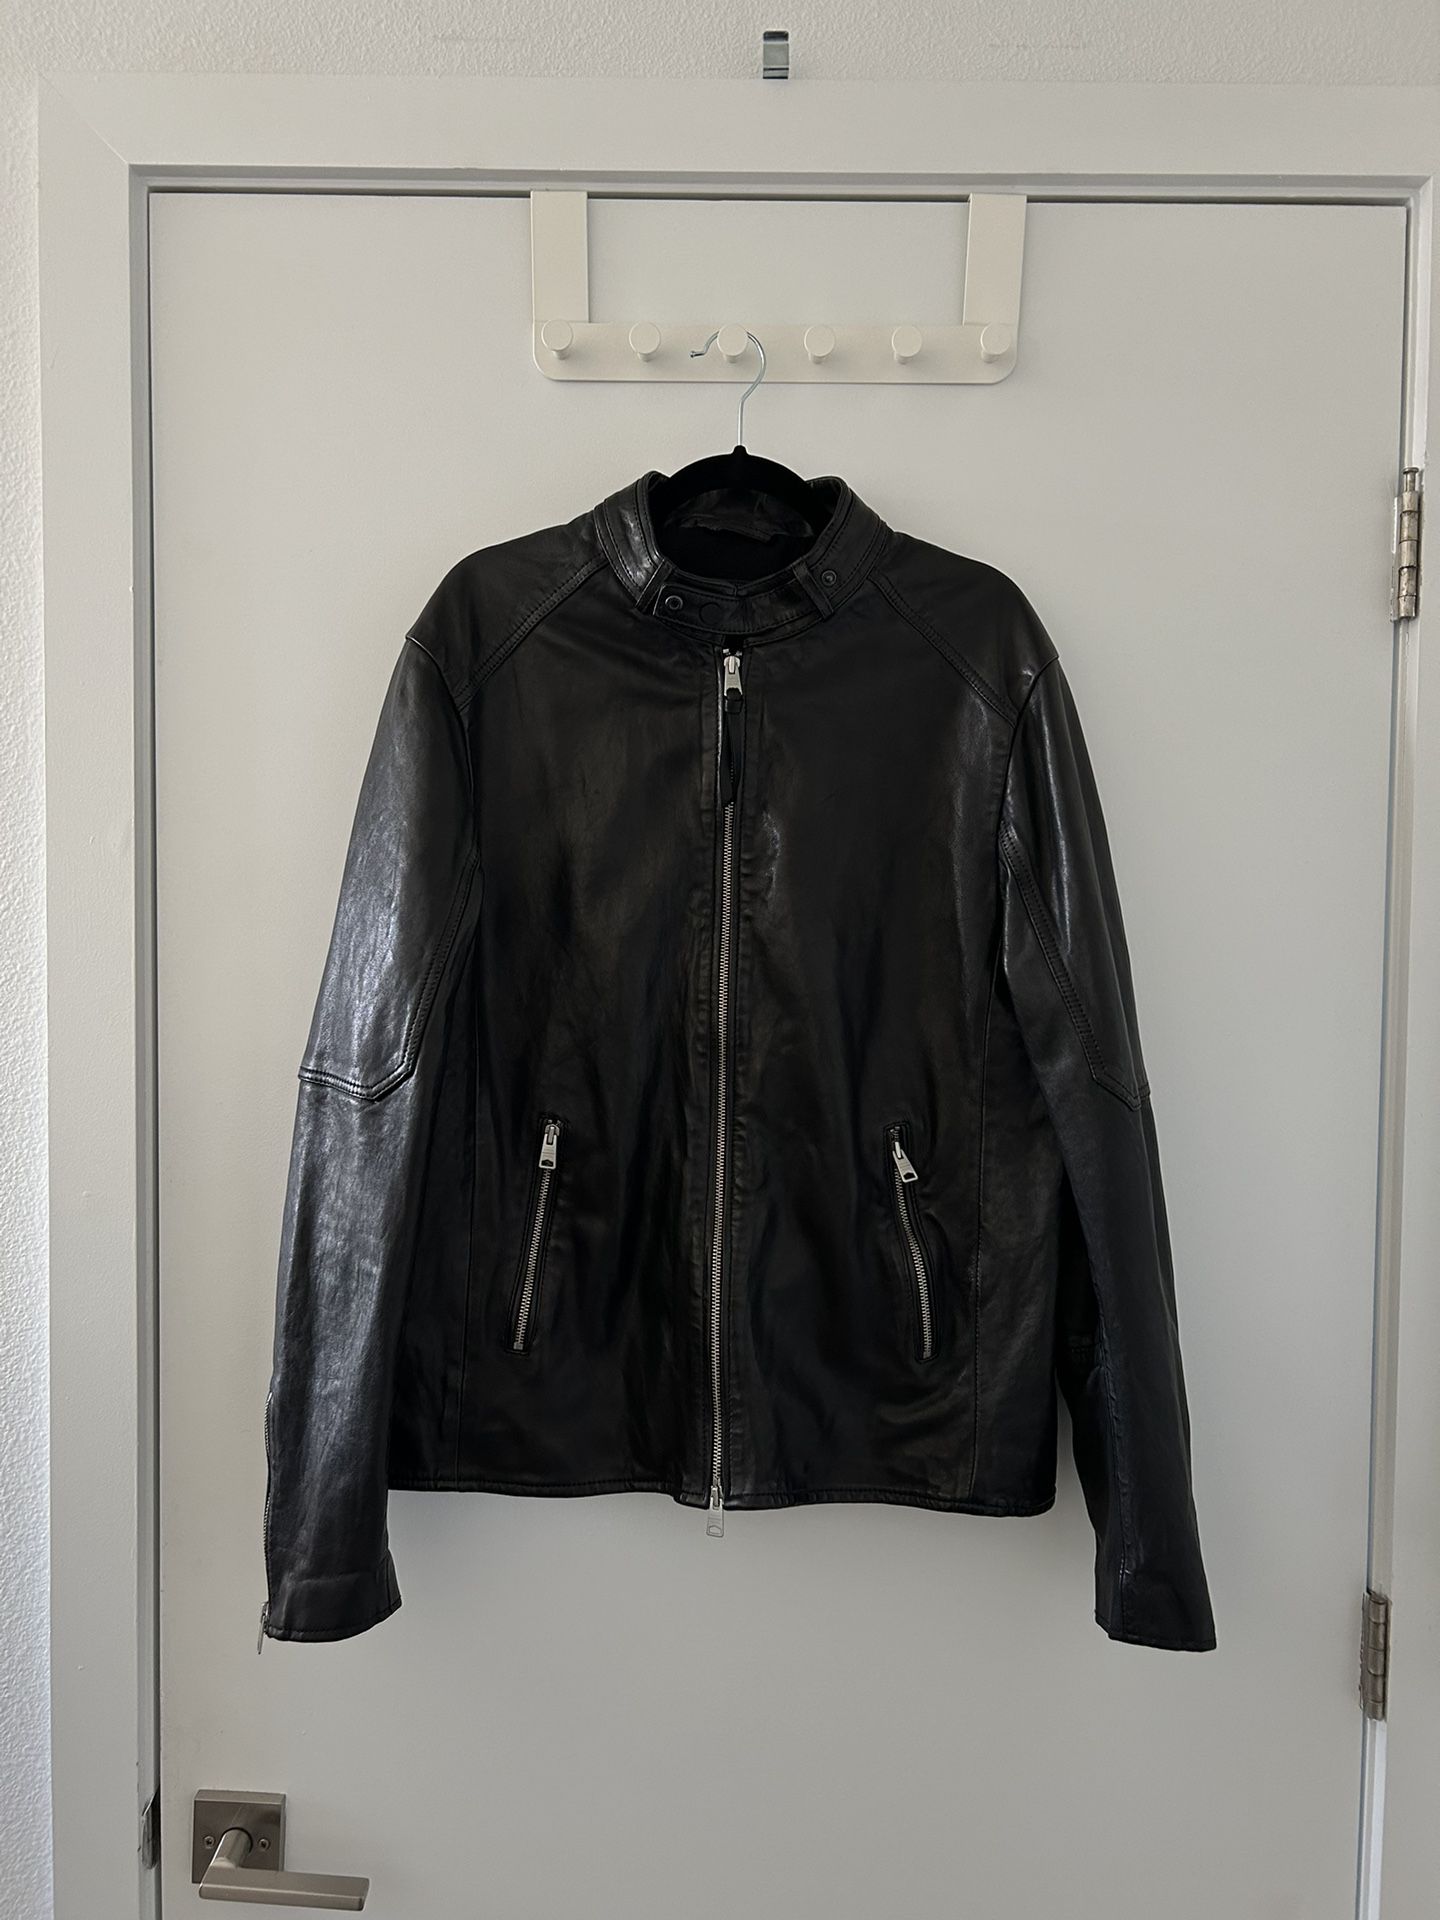 All Saints Cora Leather Jacket, Never Warn (Like New) - XXL